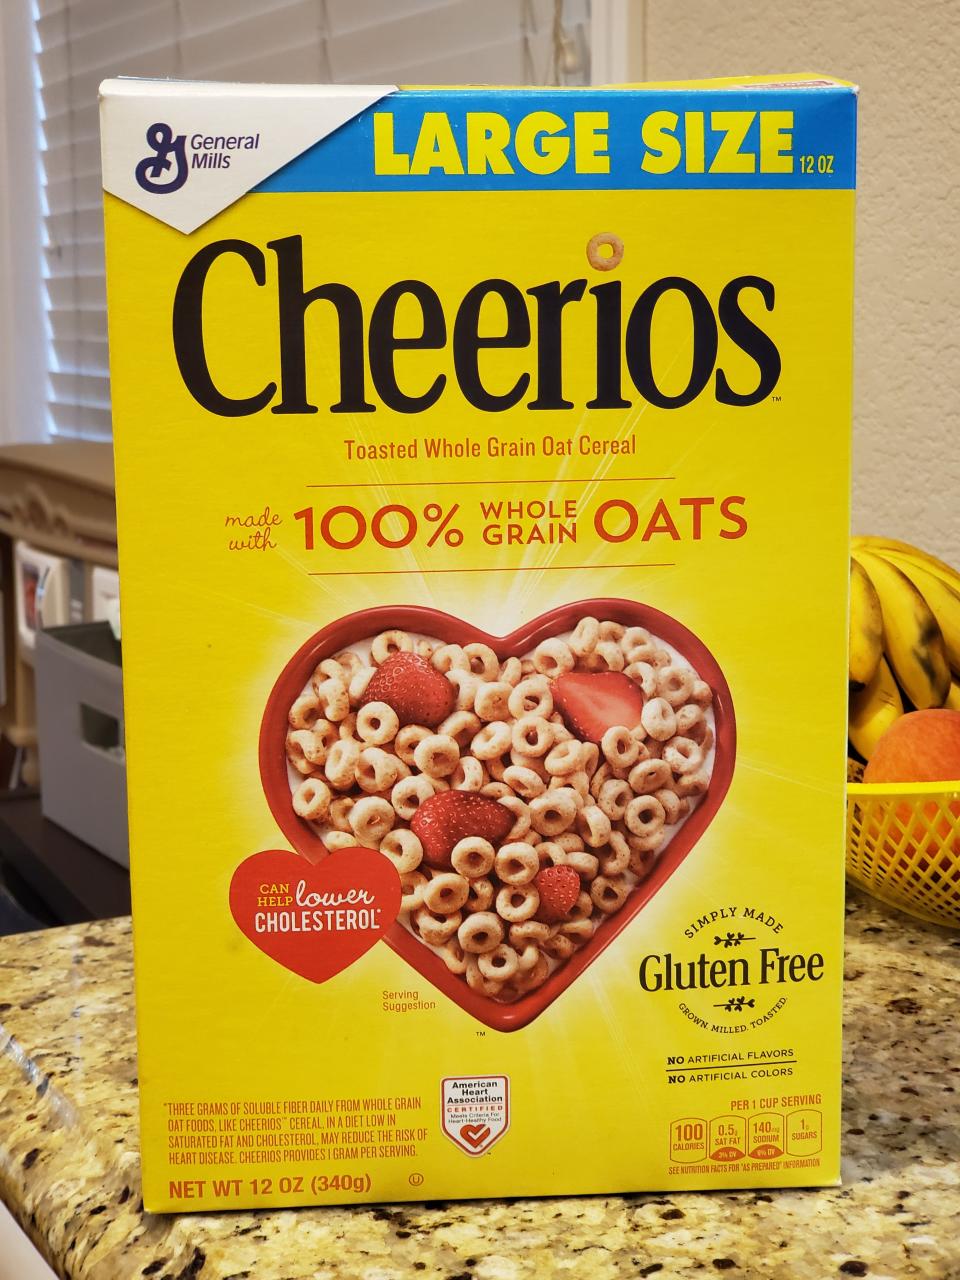 Cheerios box on counter